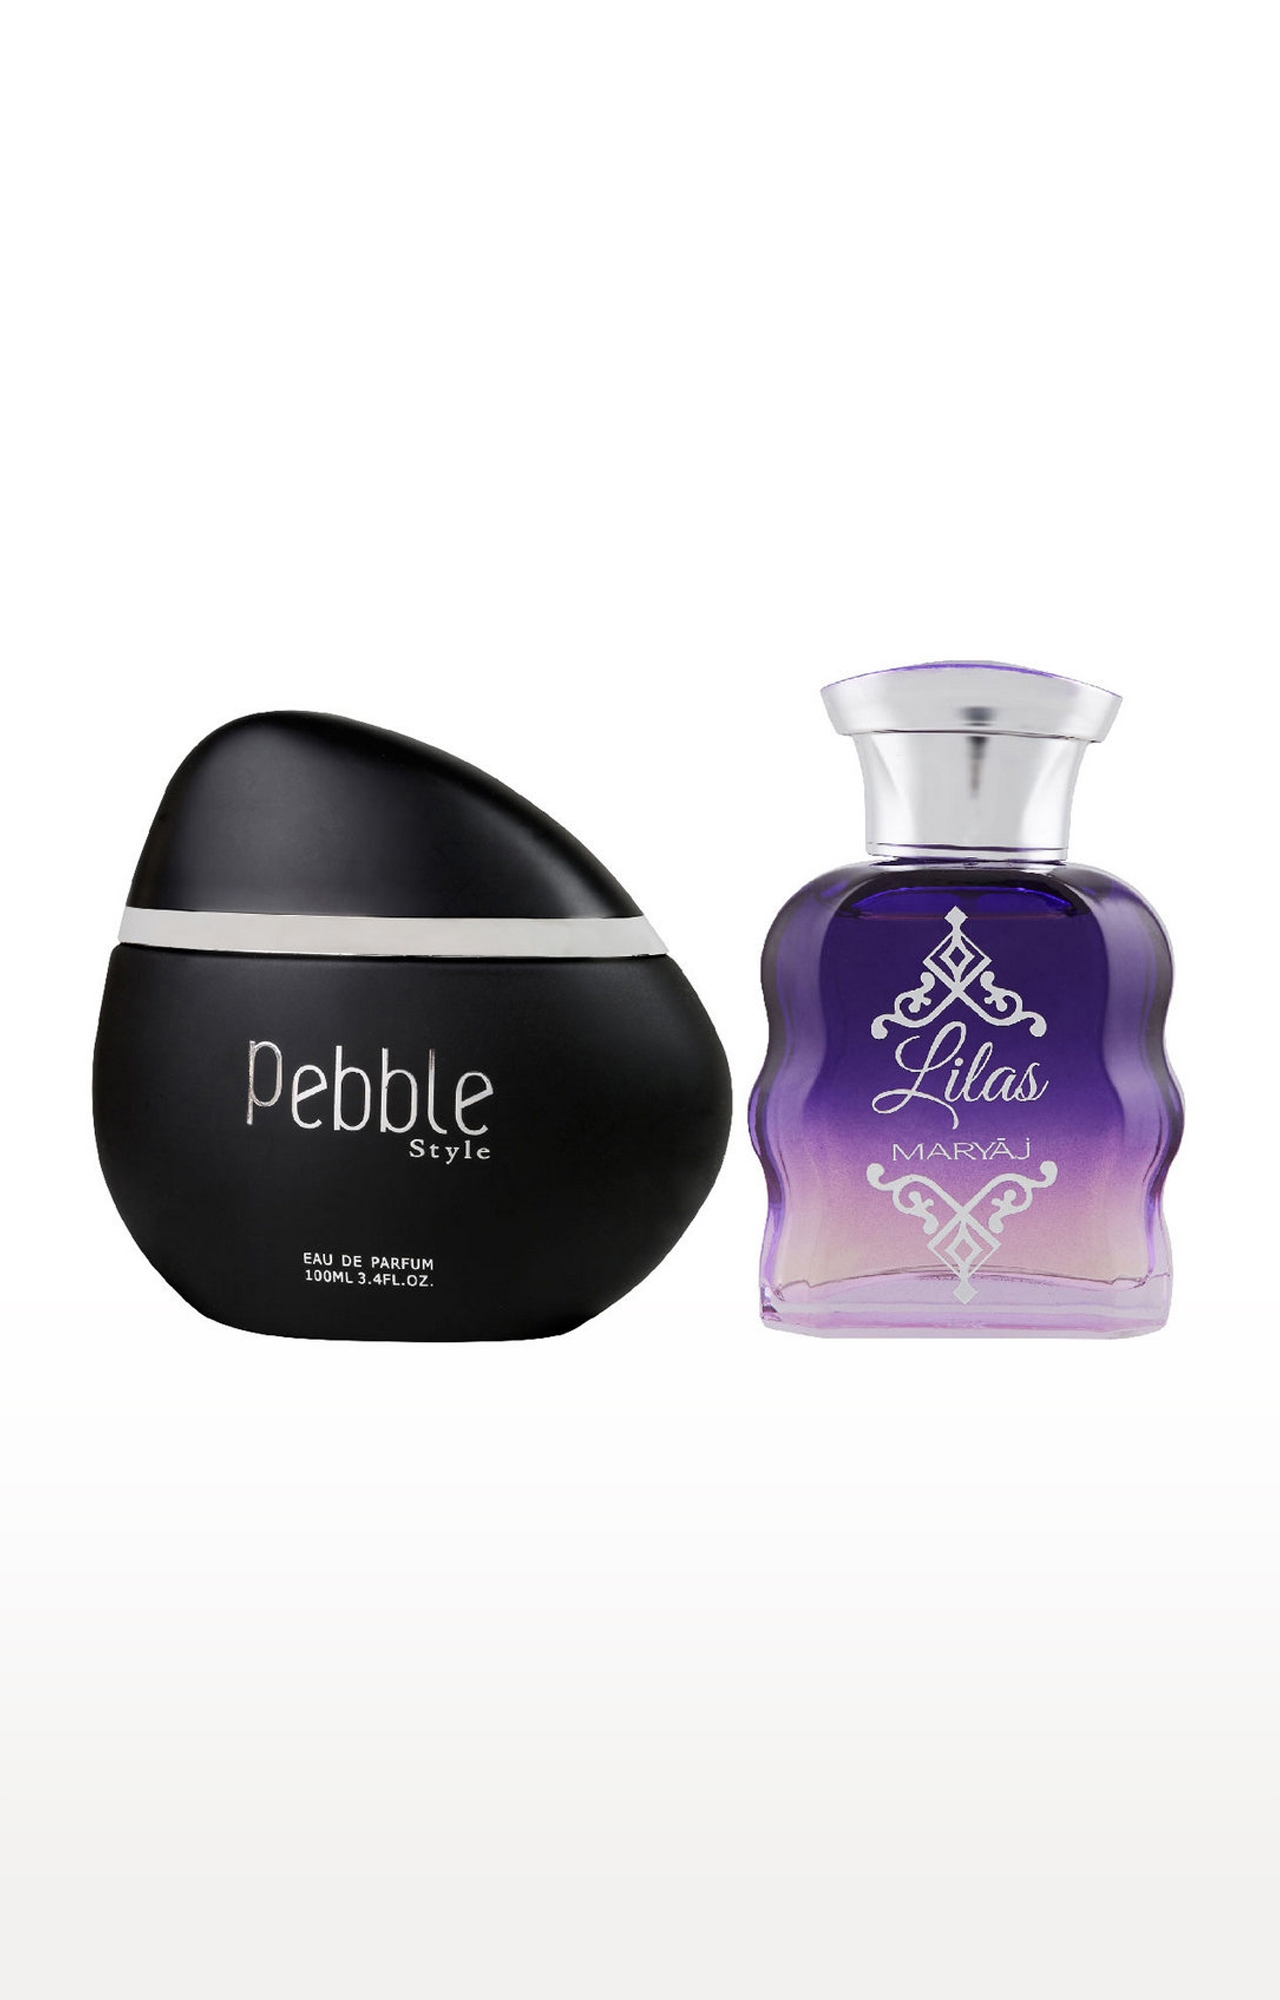 Maryaj Pebble Style Eau De Parfum Perfume 100ml for Men and Maryaj Lilas Eau De Parfum Perfume 100ml for Women